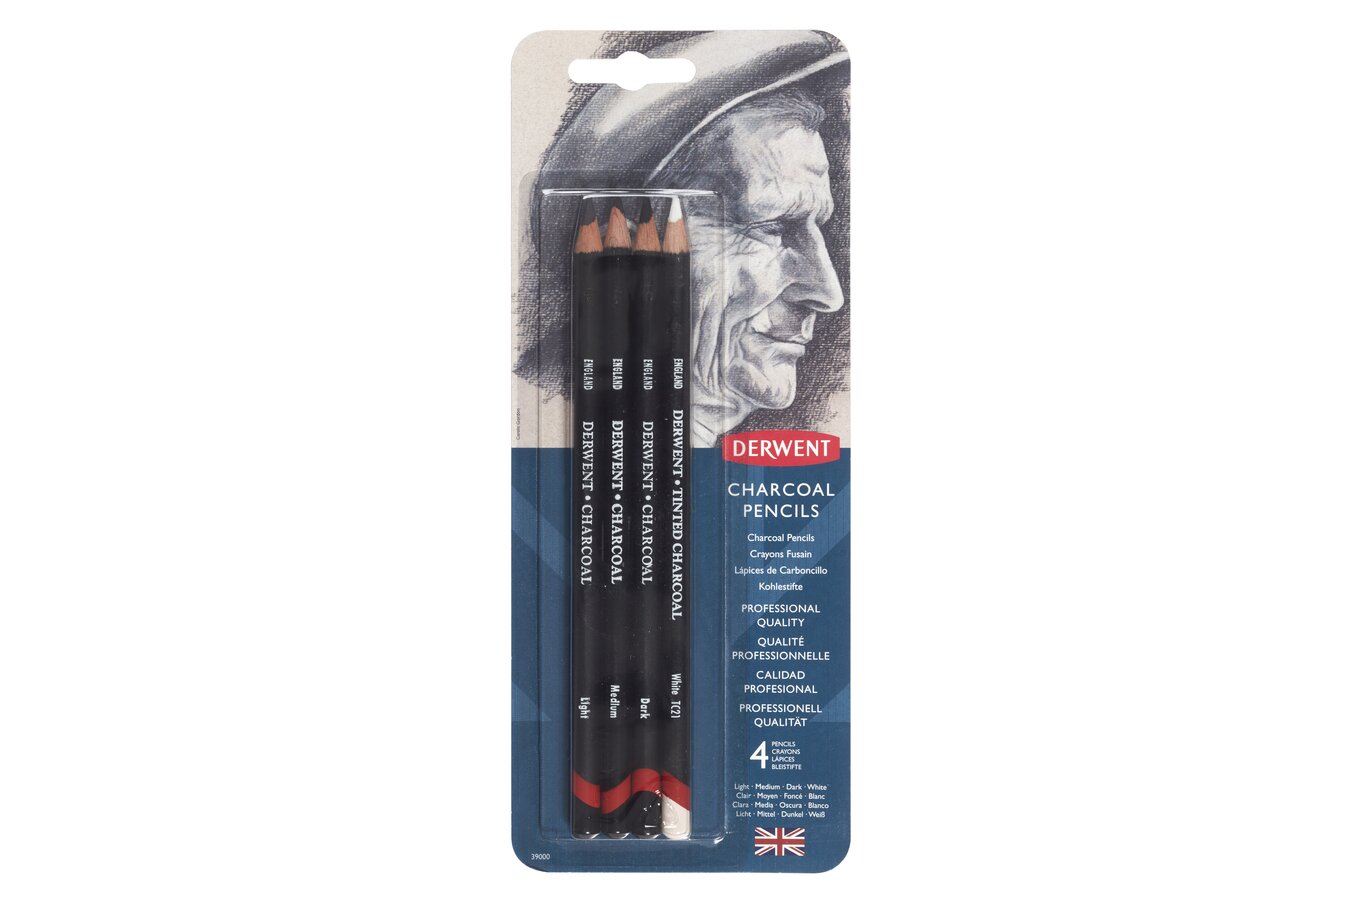 DERWENT 12-piece Tinted Charcoal Pencil Set - 9587650